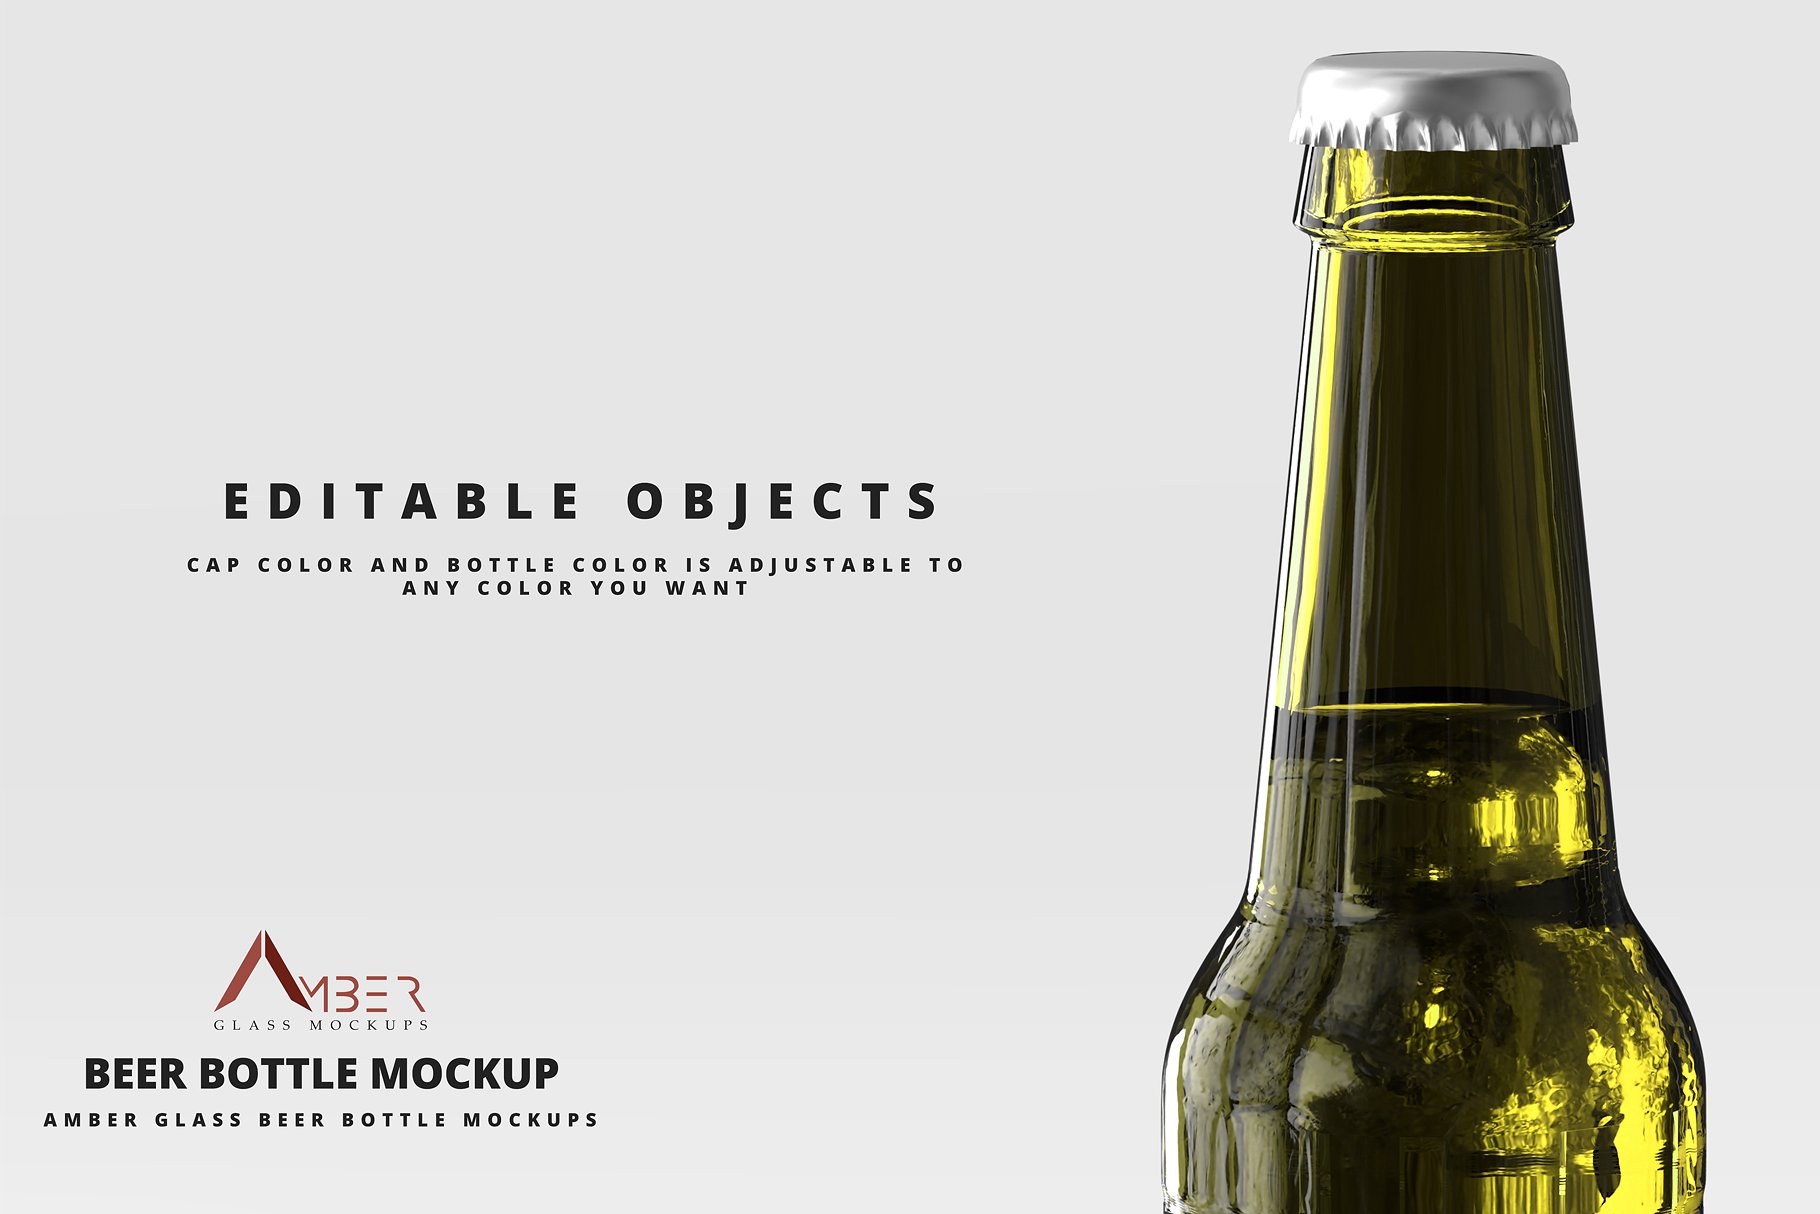 琥珀玻璃啤酒瓶样机 Amber Glass Beer Bottle Mockup插图3